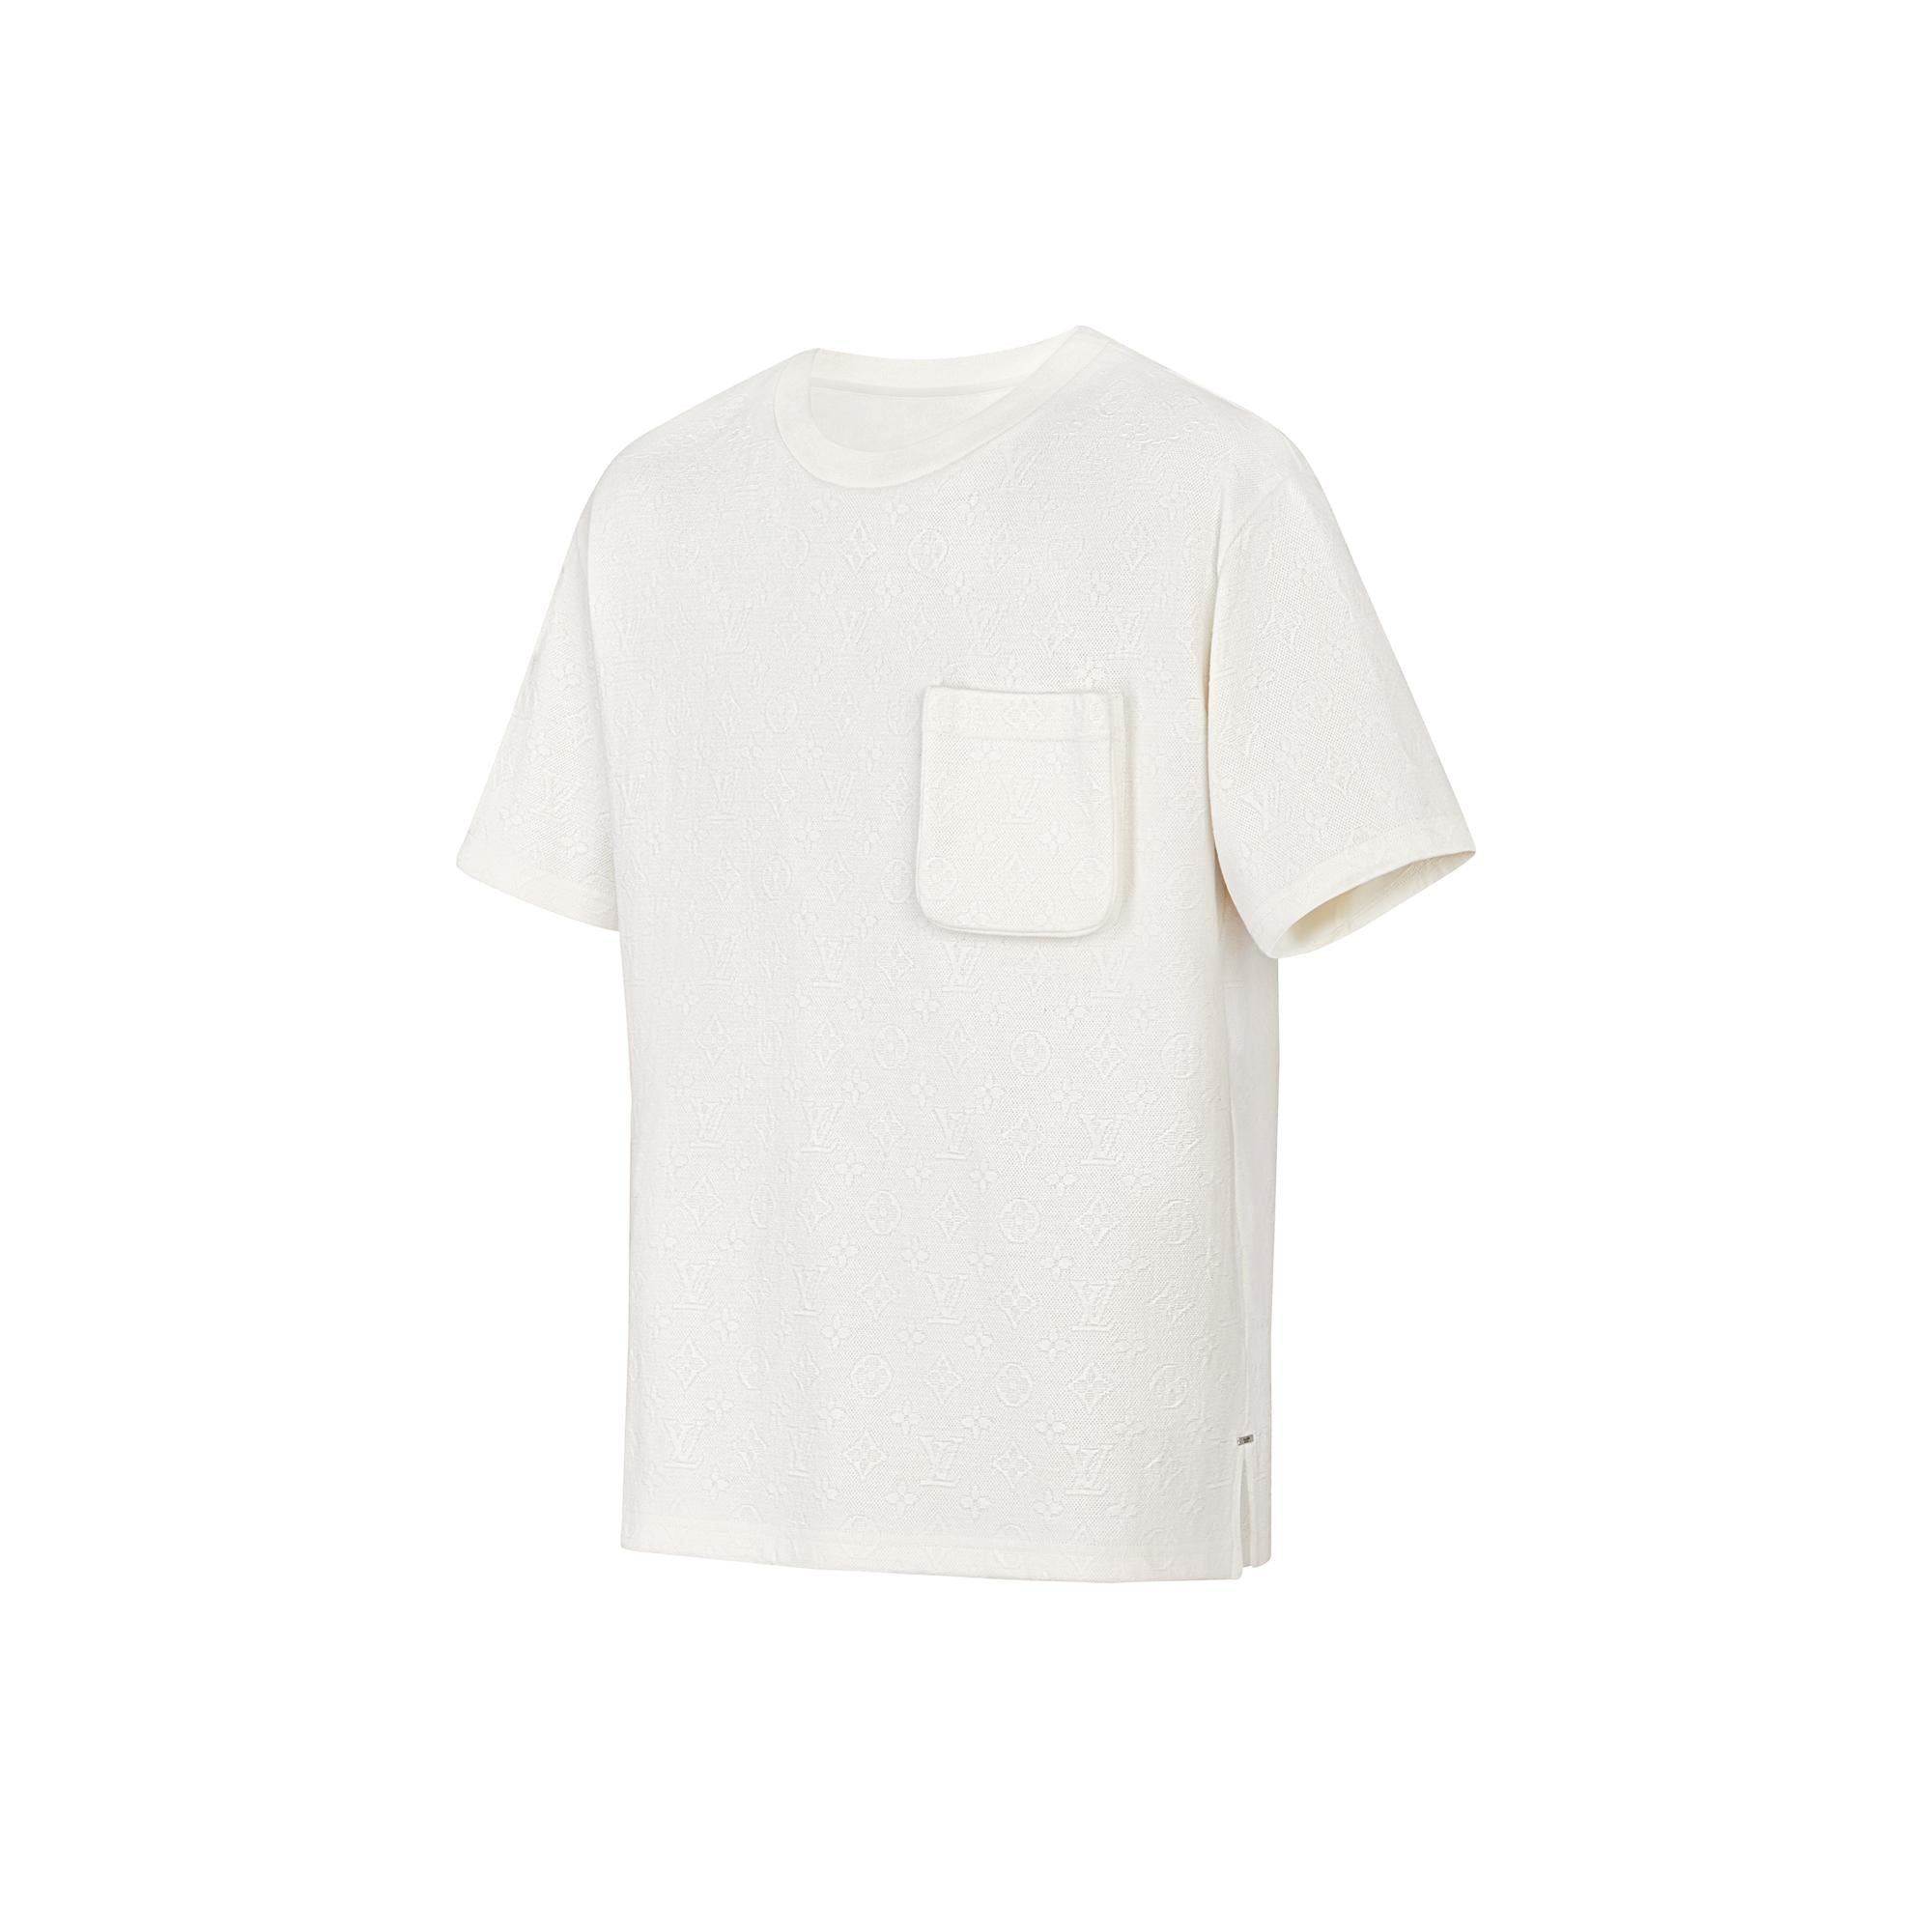 Louis Vuitton Men039s White Cotton Allover Printed Logo TShirt size L   eBay